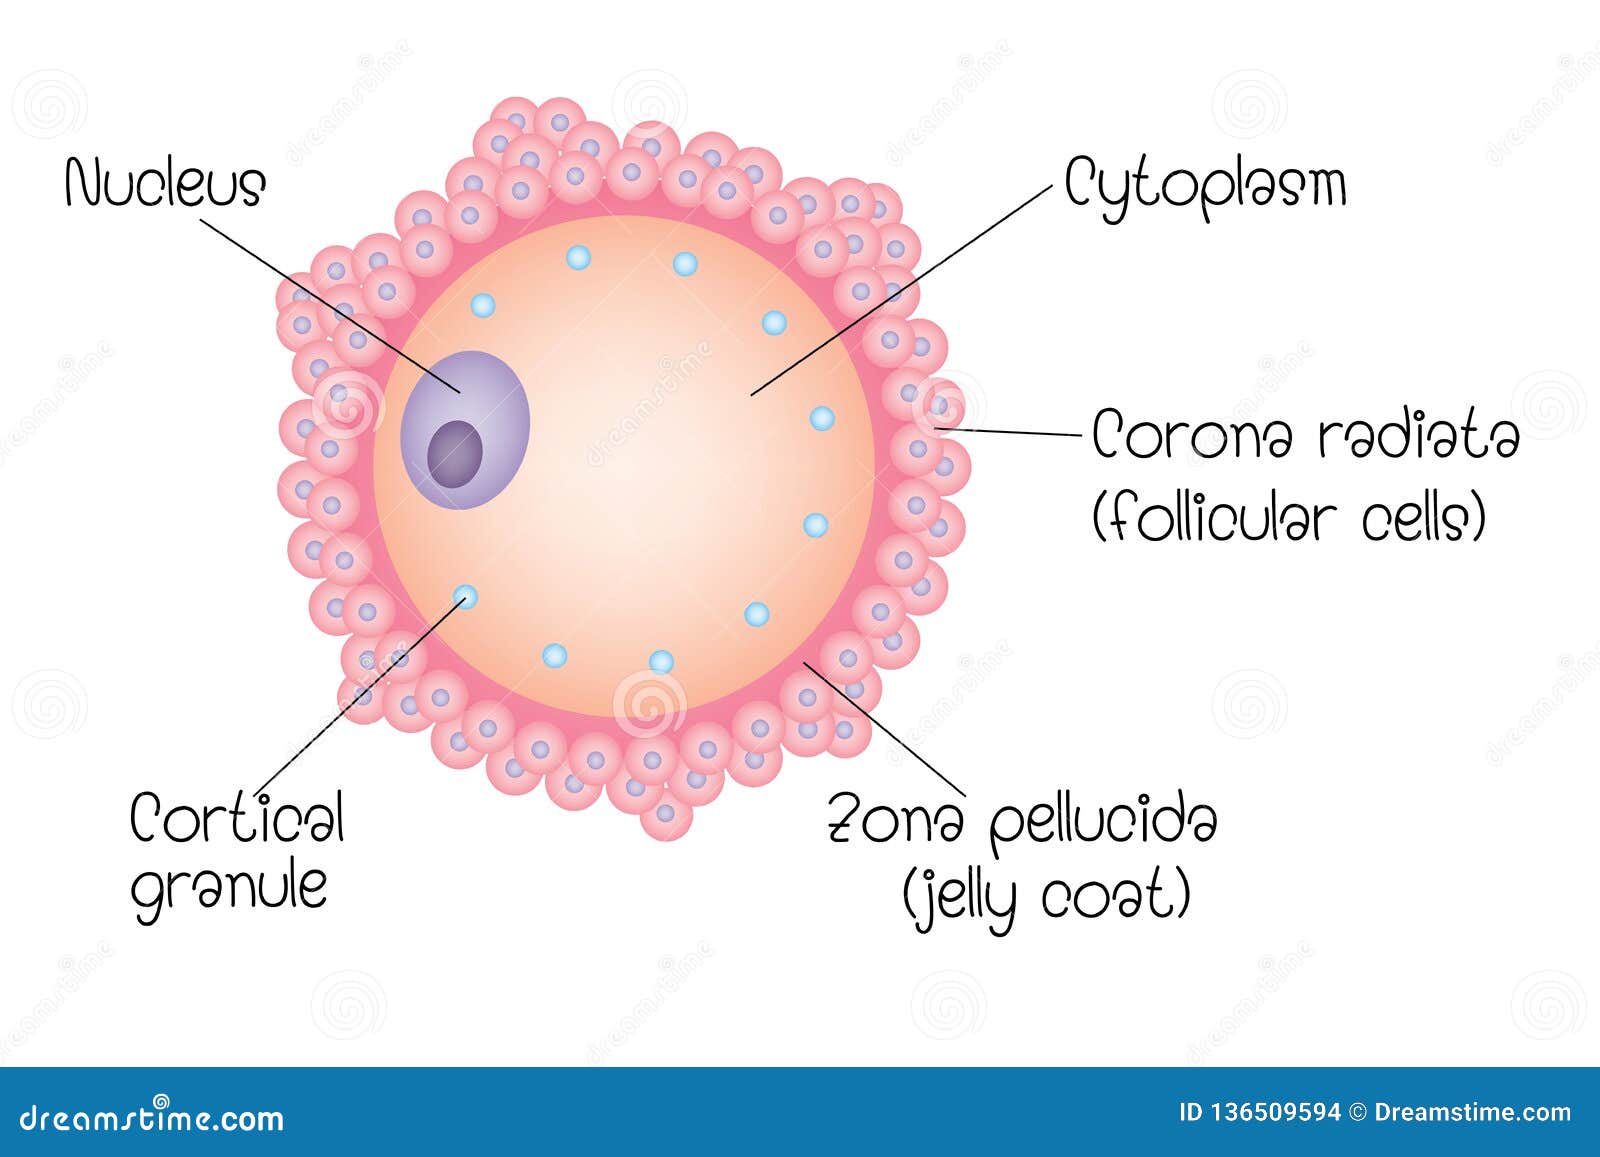 structure of ovum